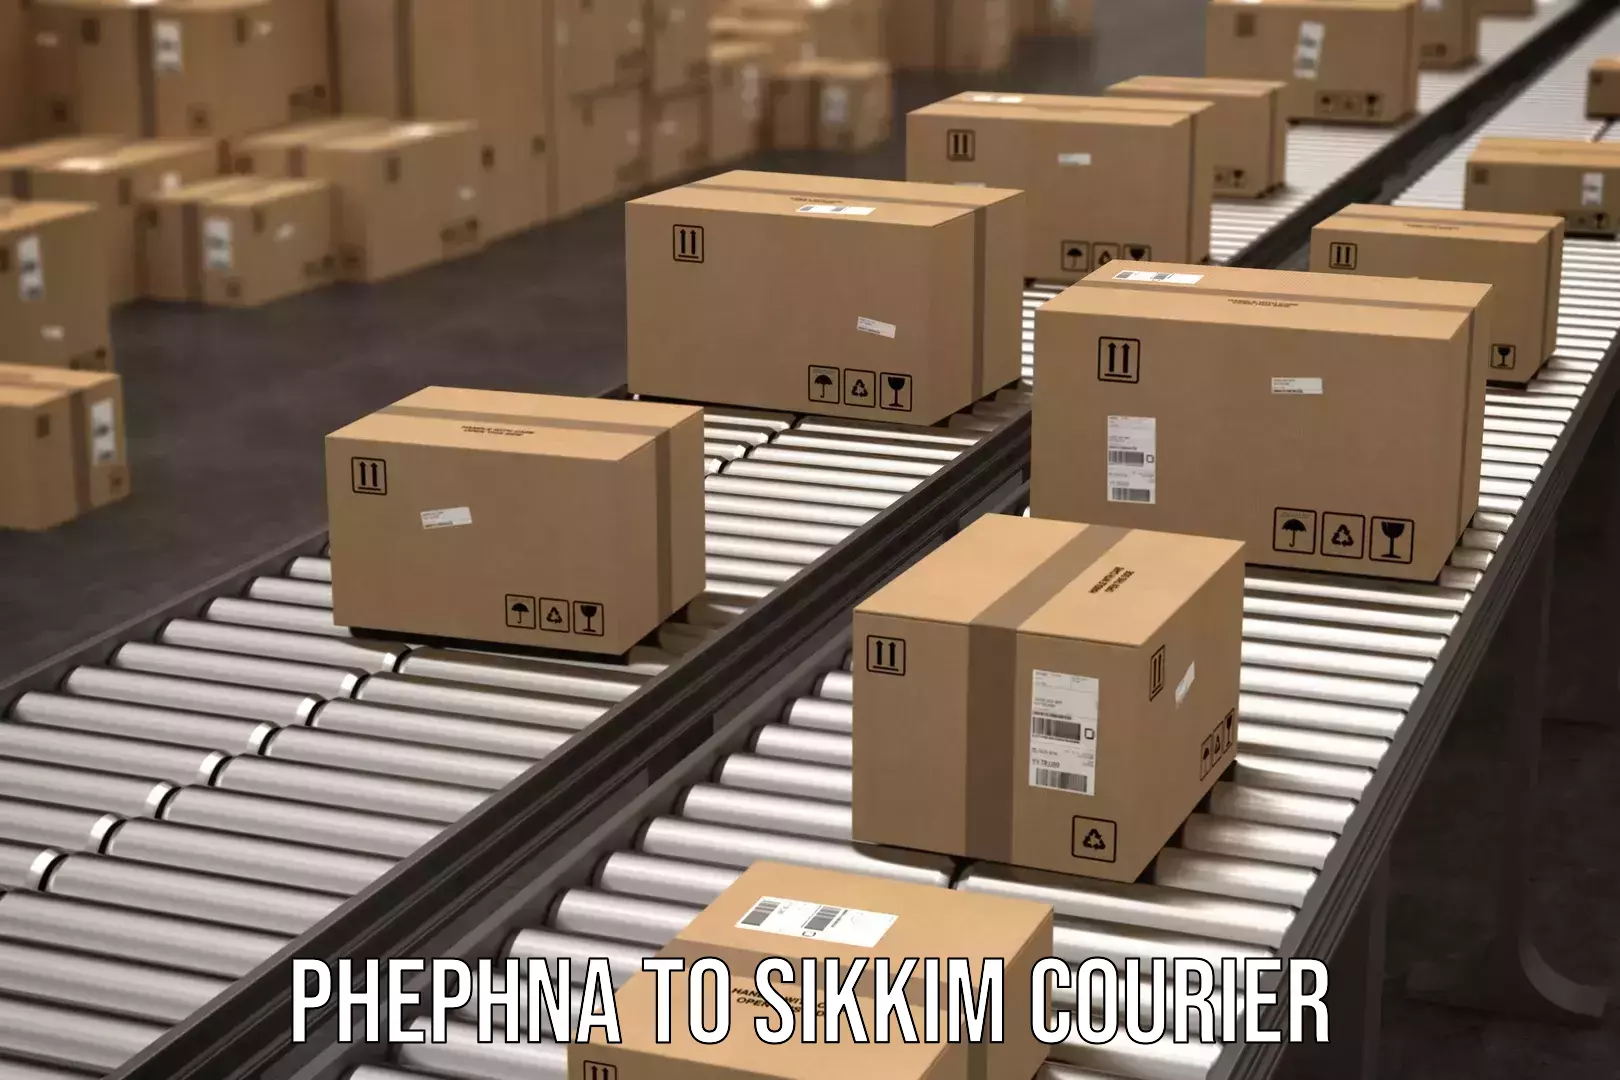 High-performance logistics Phephna to West Sikkim